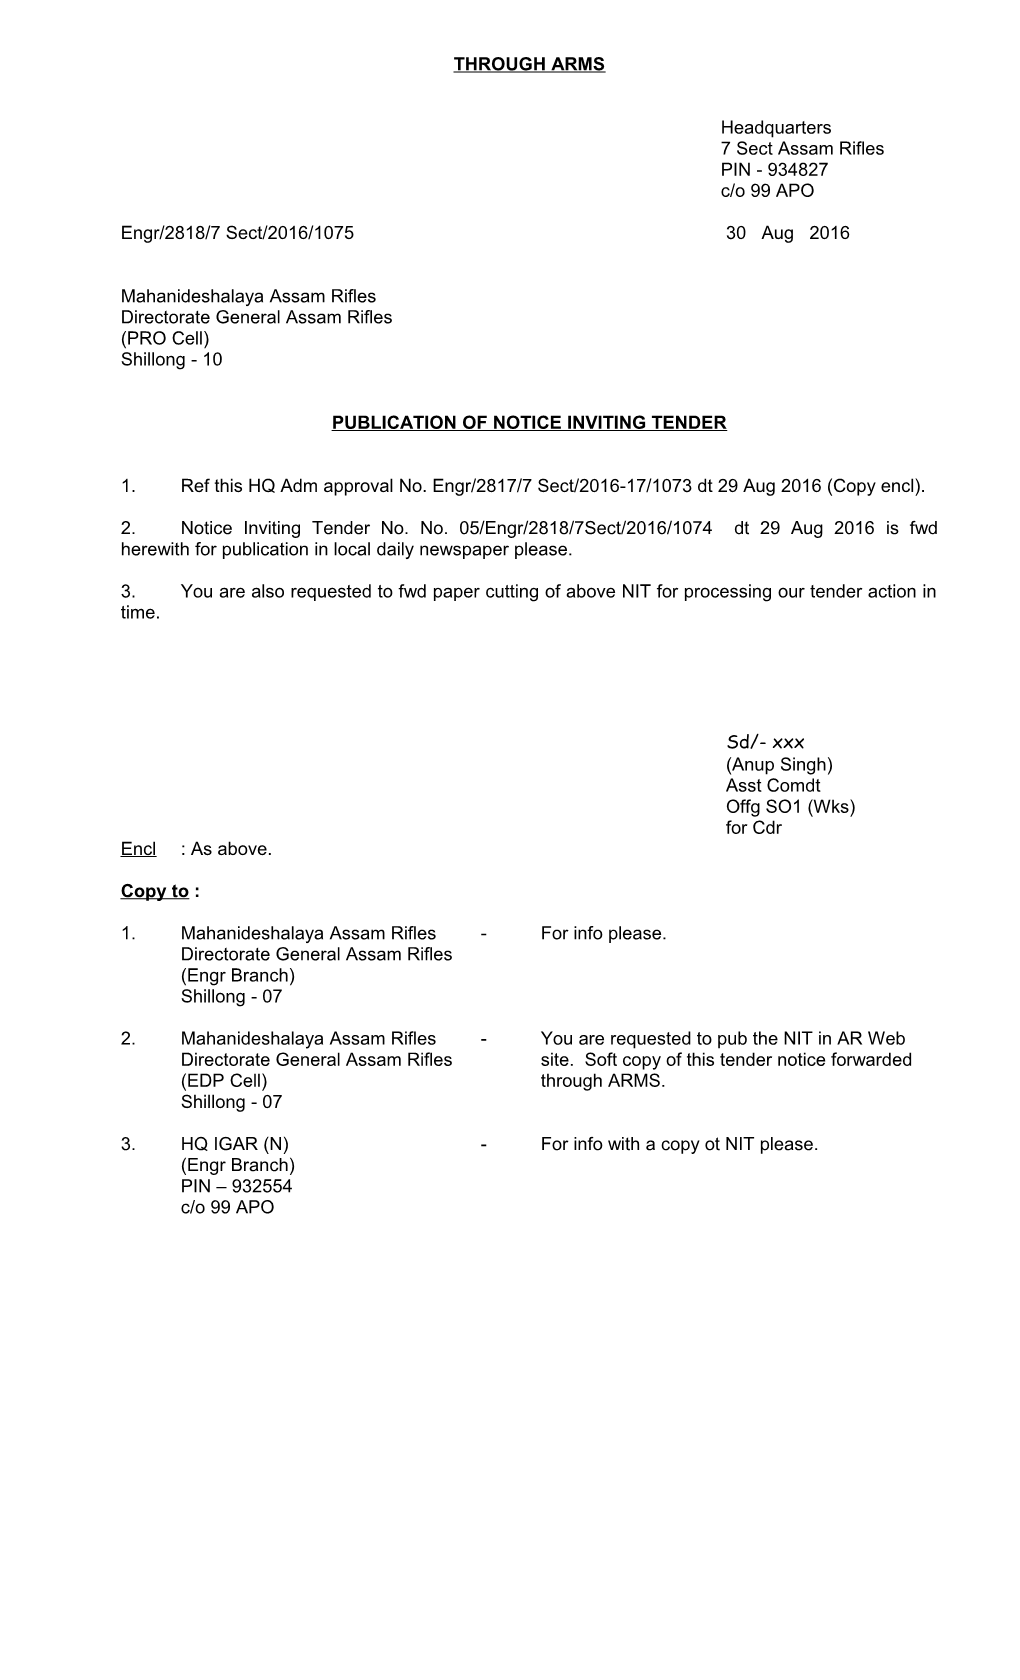 Publication of Notice Inviting Tender